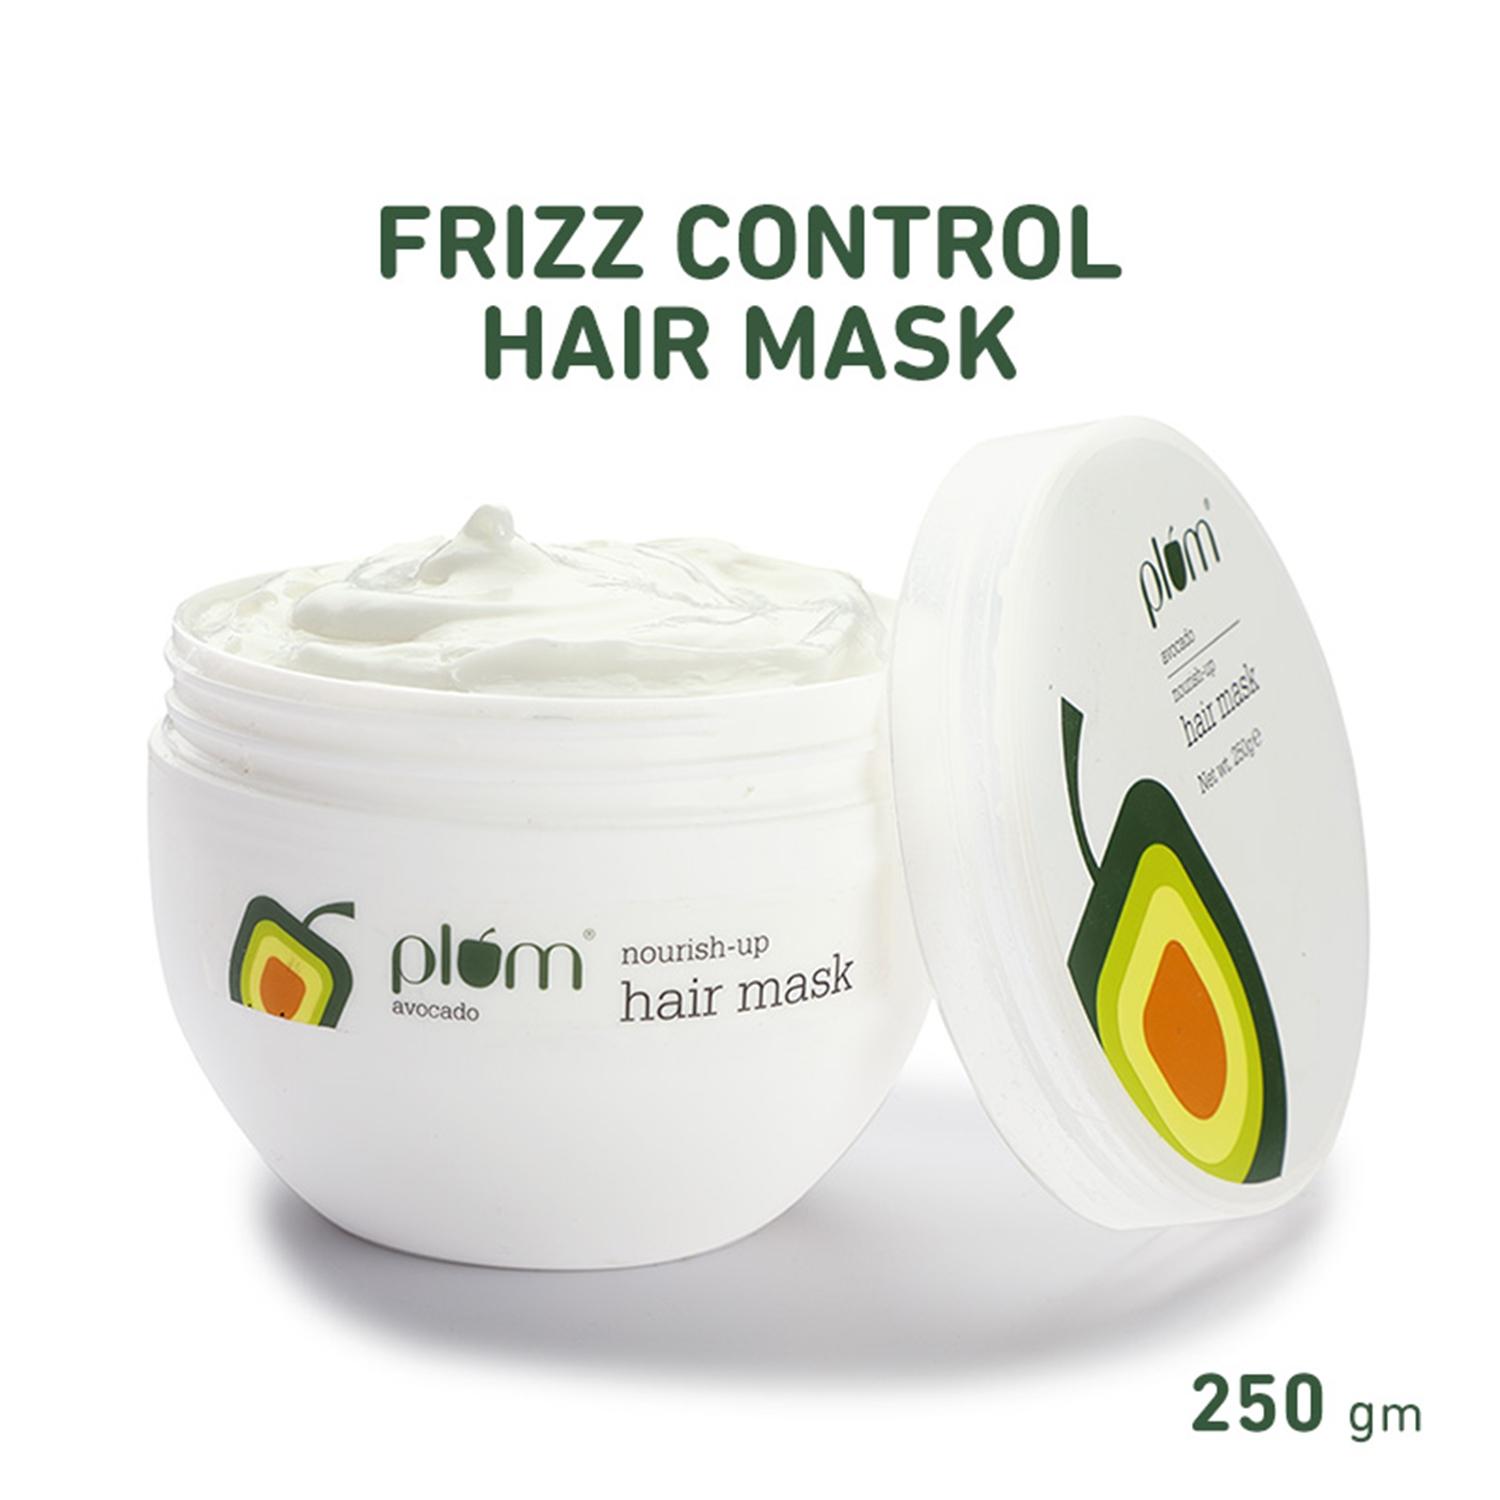 plum avocado nourish-up hair mask nourishes hair|retains moisture for dry & frizzy hair (250 gm)